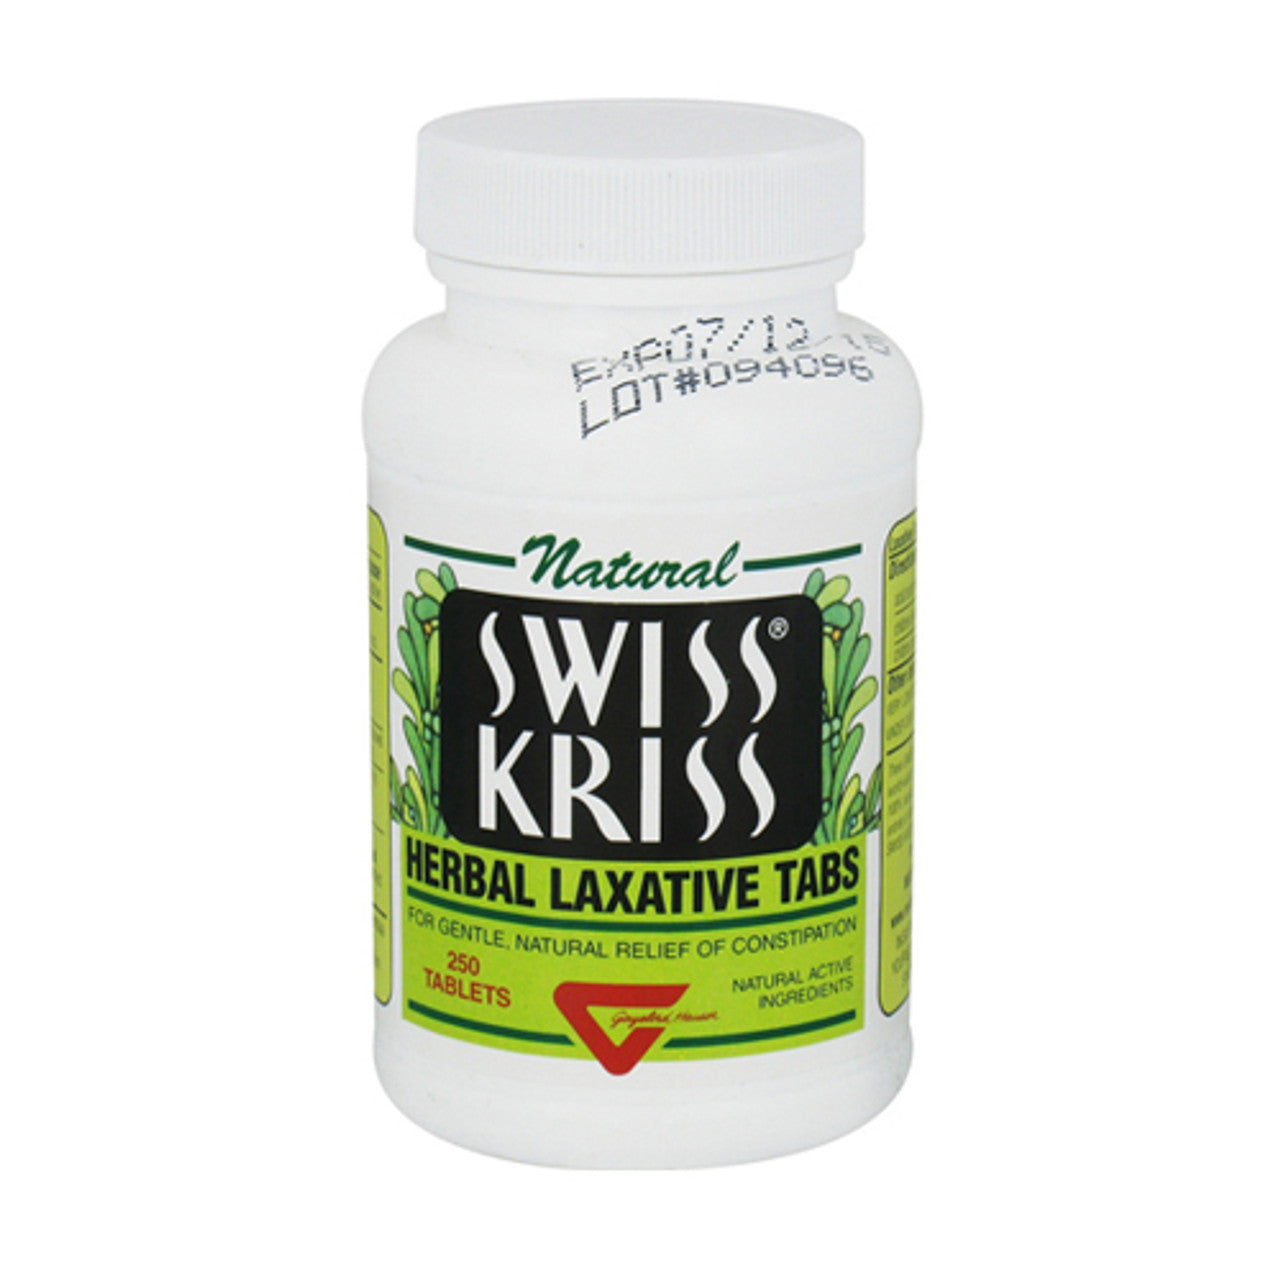 Swiss Kriss Herbal Laxative Tablets - 250 Ea